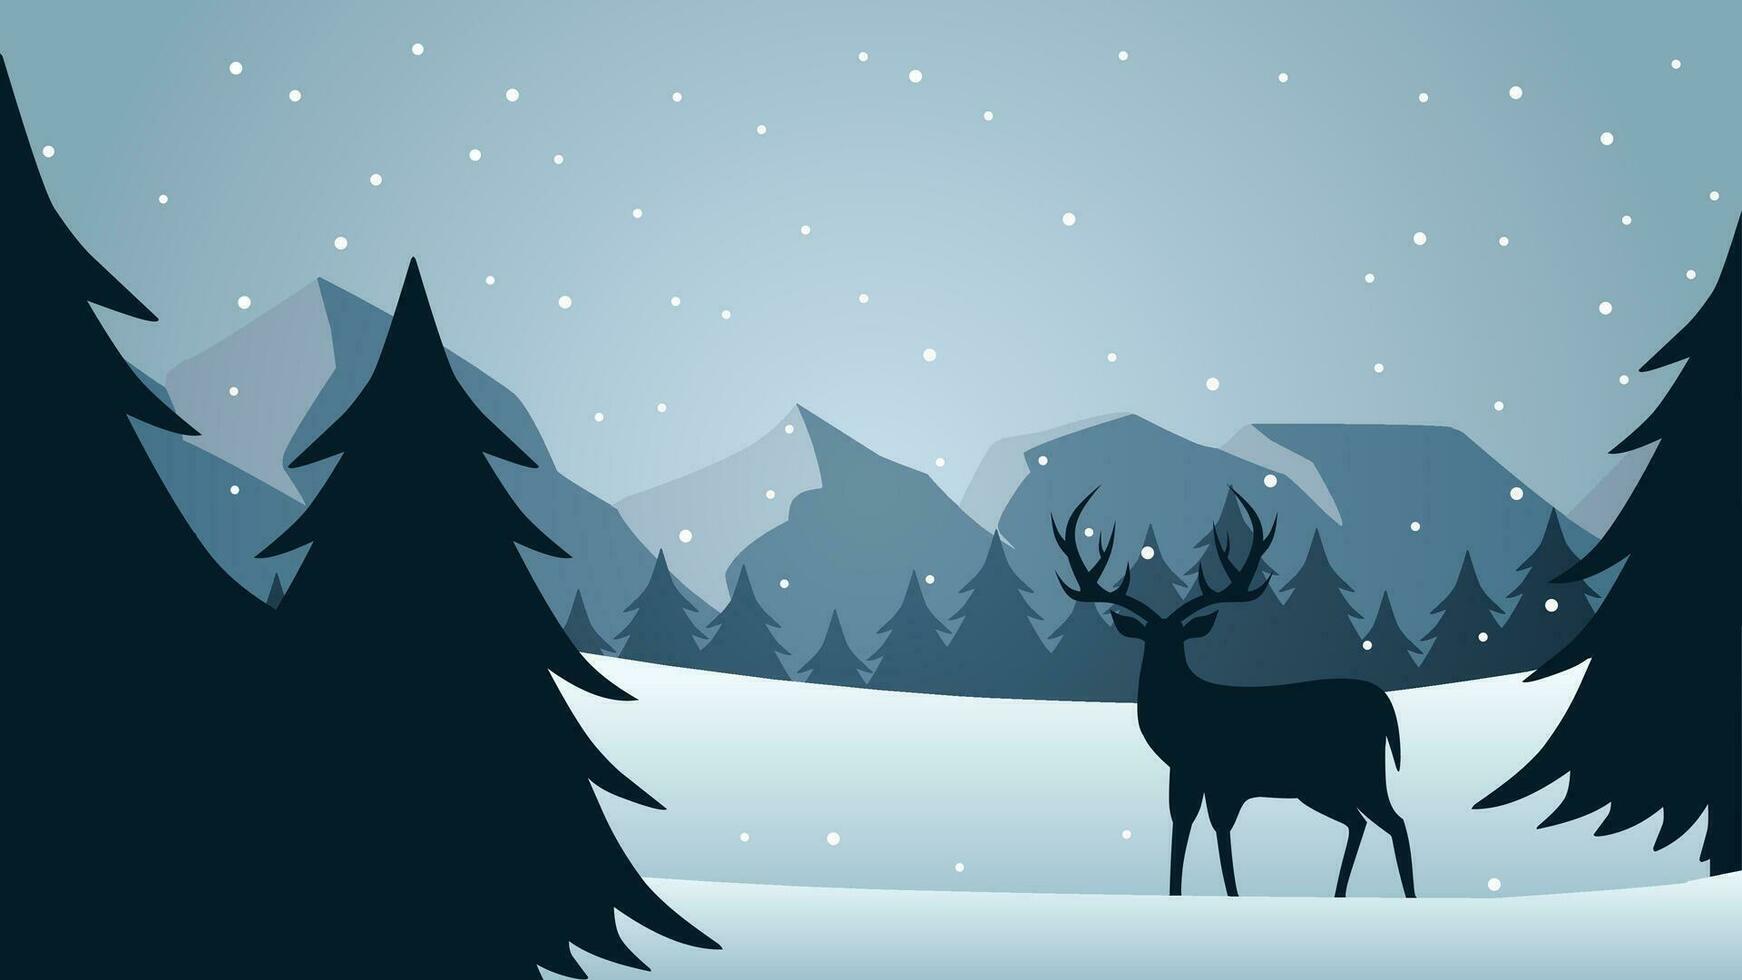 Wildlife reindeer in winter landscape vector illustration. Scenery of reindeer silhouette in the pine forest. Deer wildlife panorama for illustration, background or wallpaper